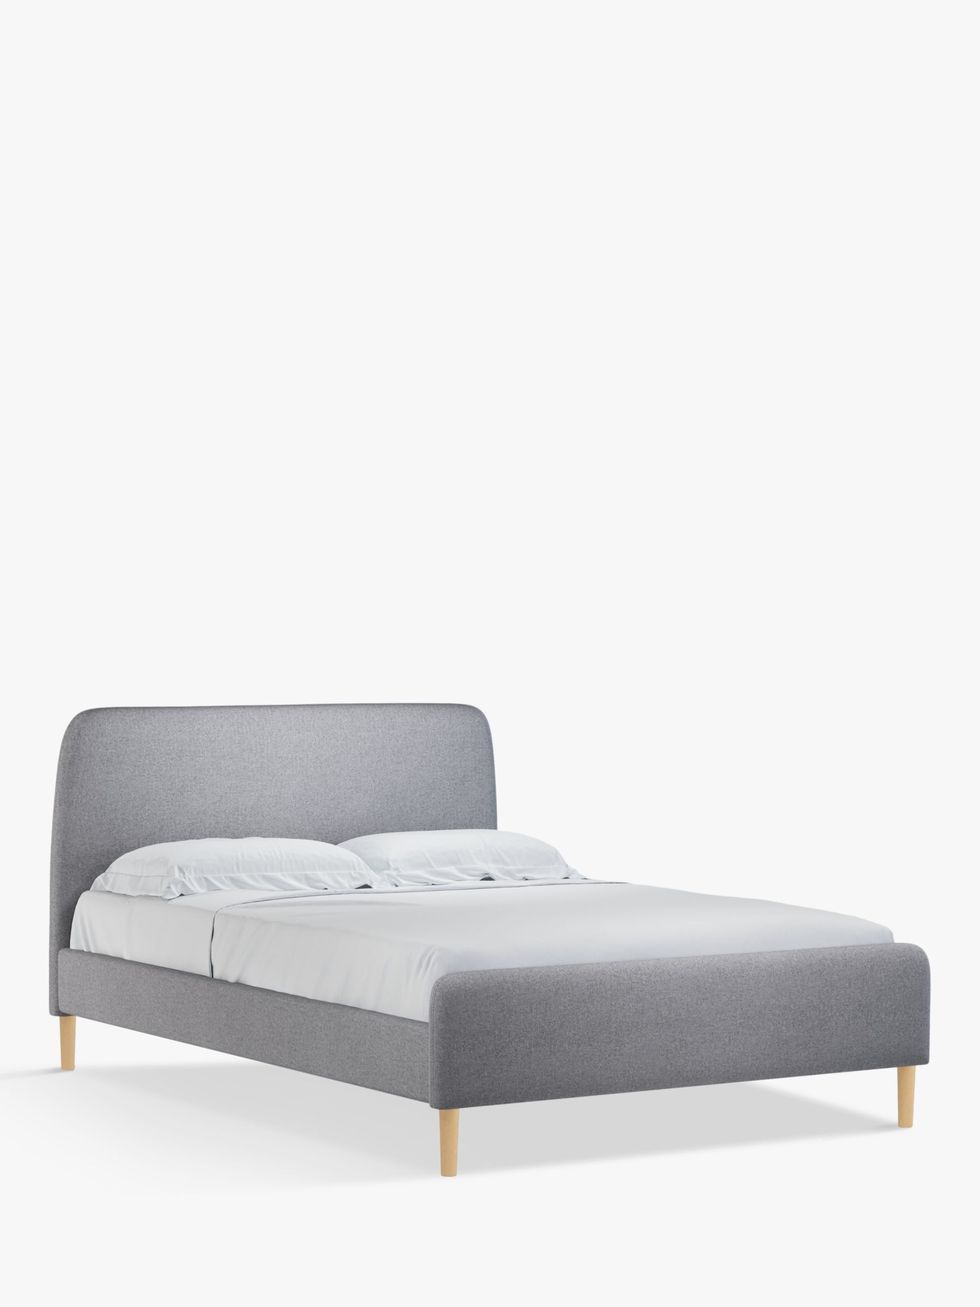 Bonn Upholstered Bed Frame, Saga Grey